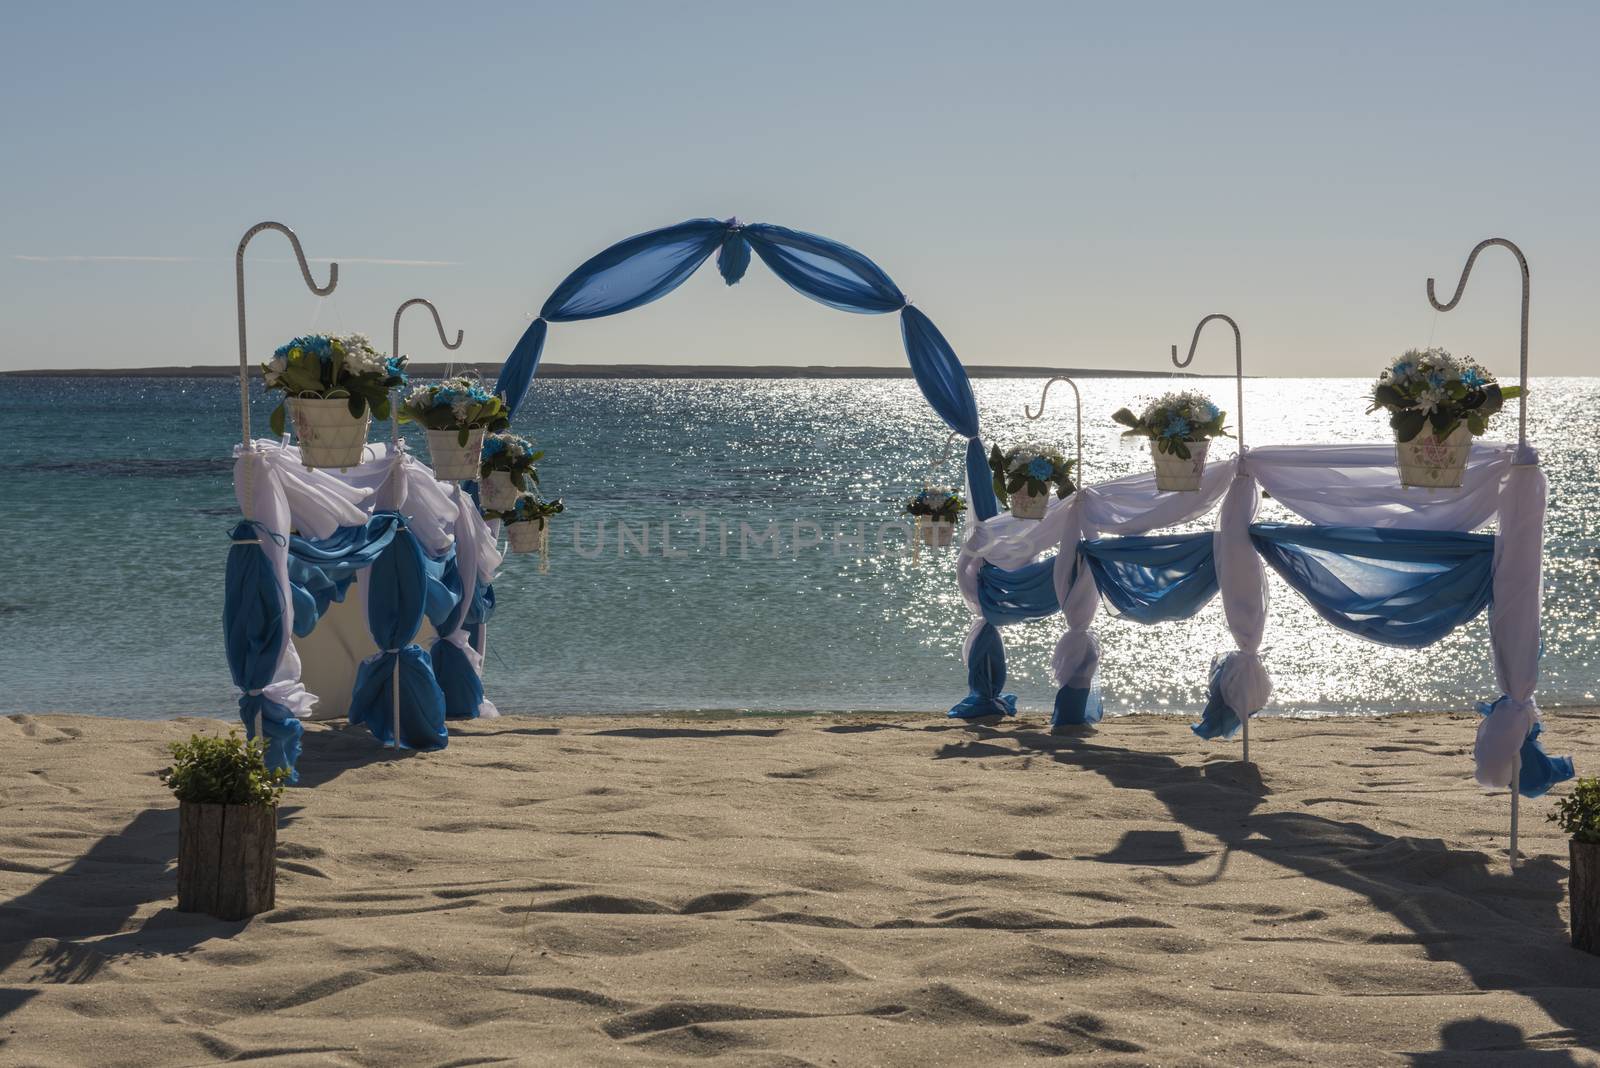 Wedding aisle setup on tropical beach by paulvinten